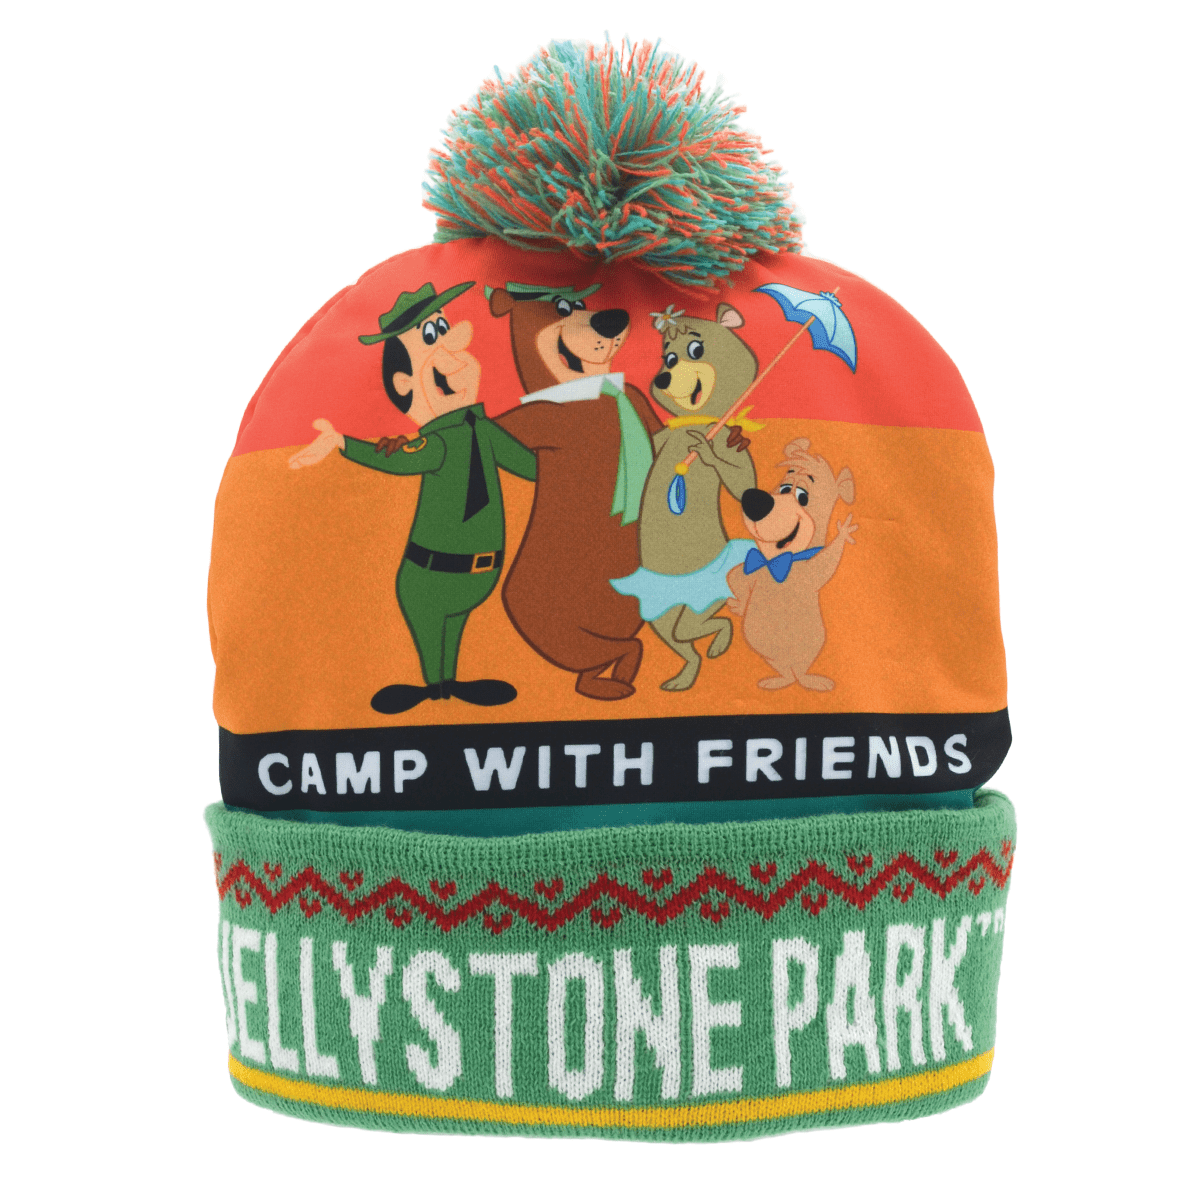 Jellystone Park Camp With Friends Beanie